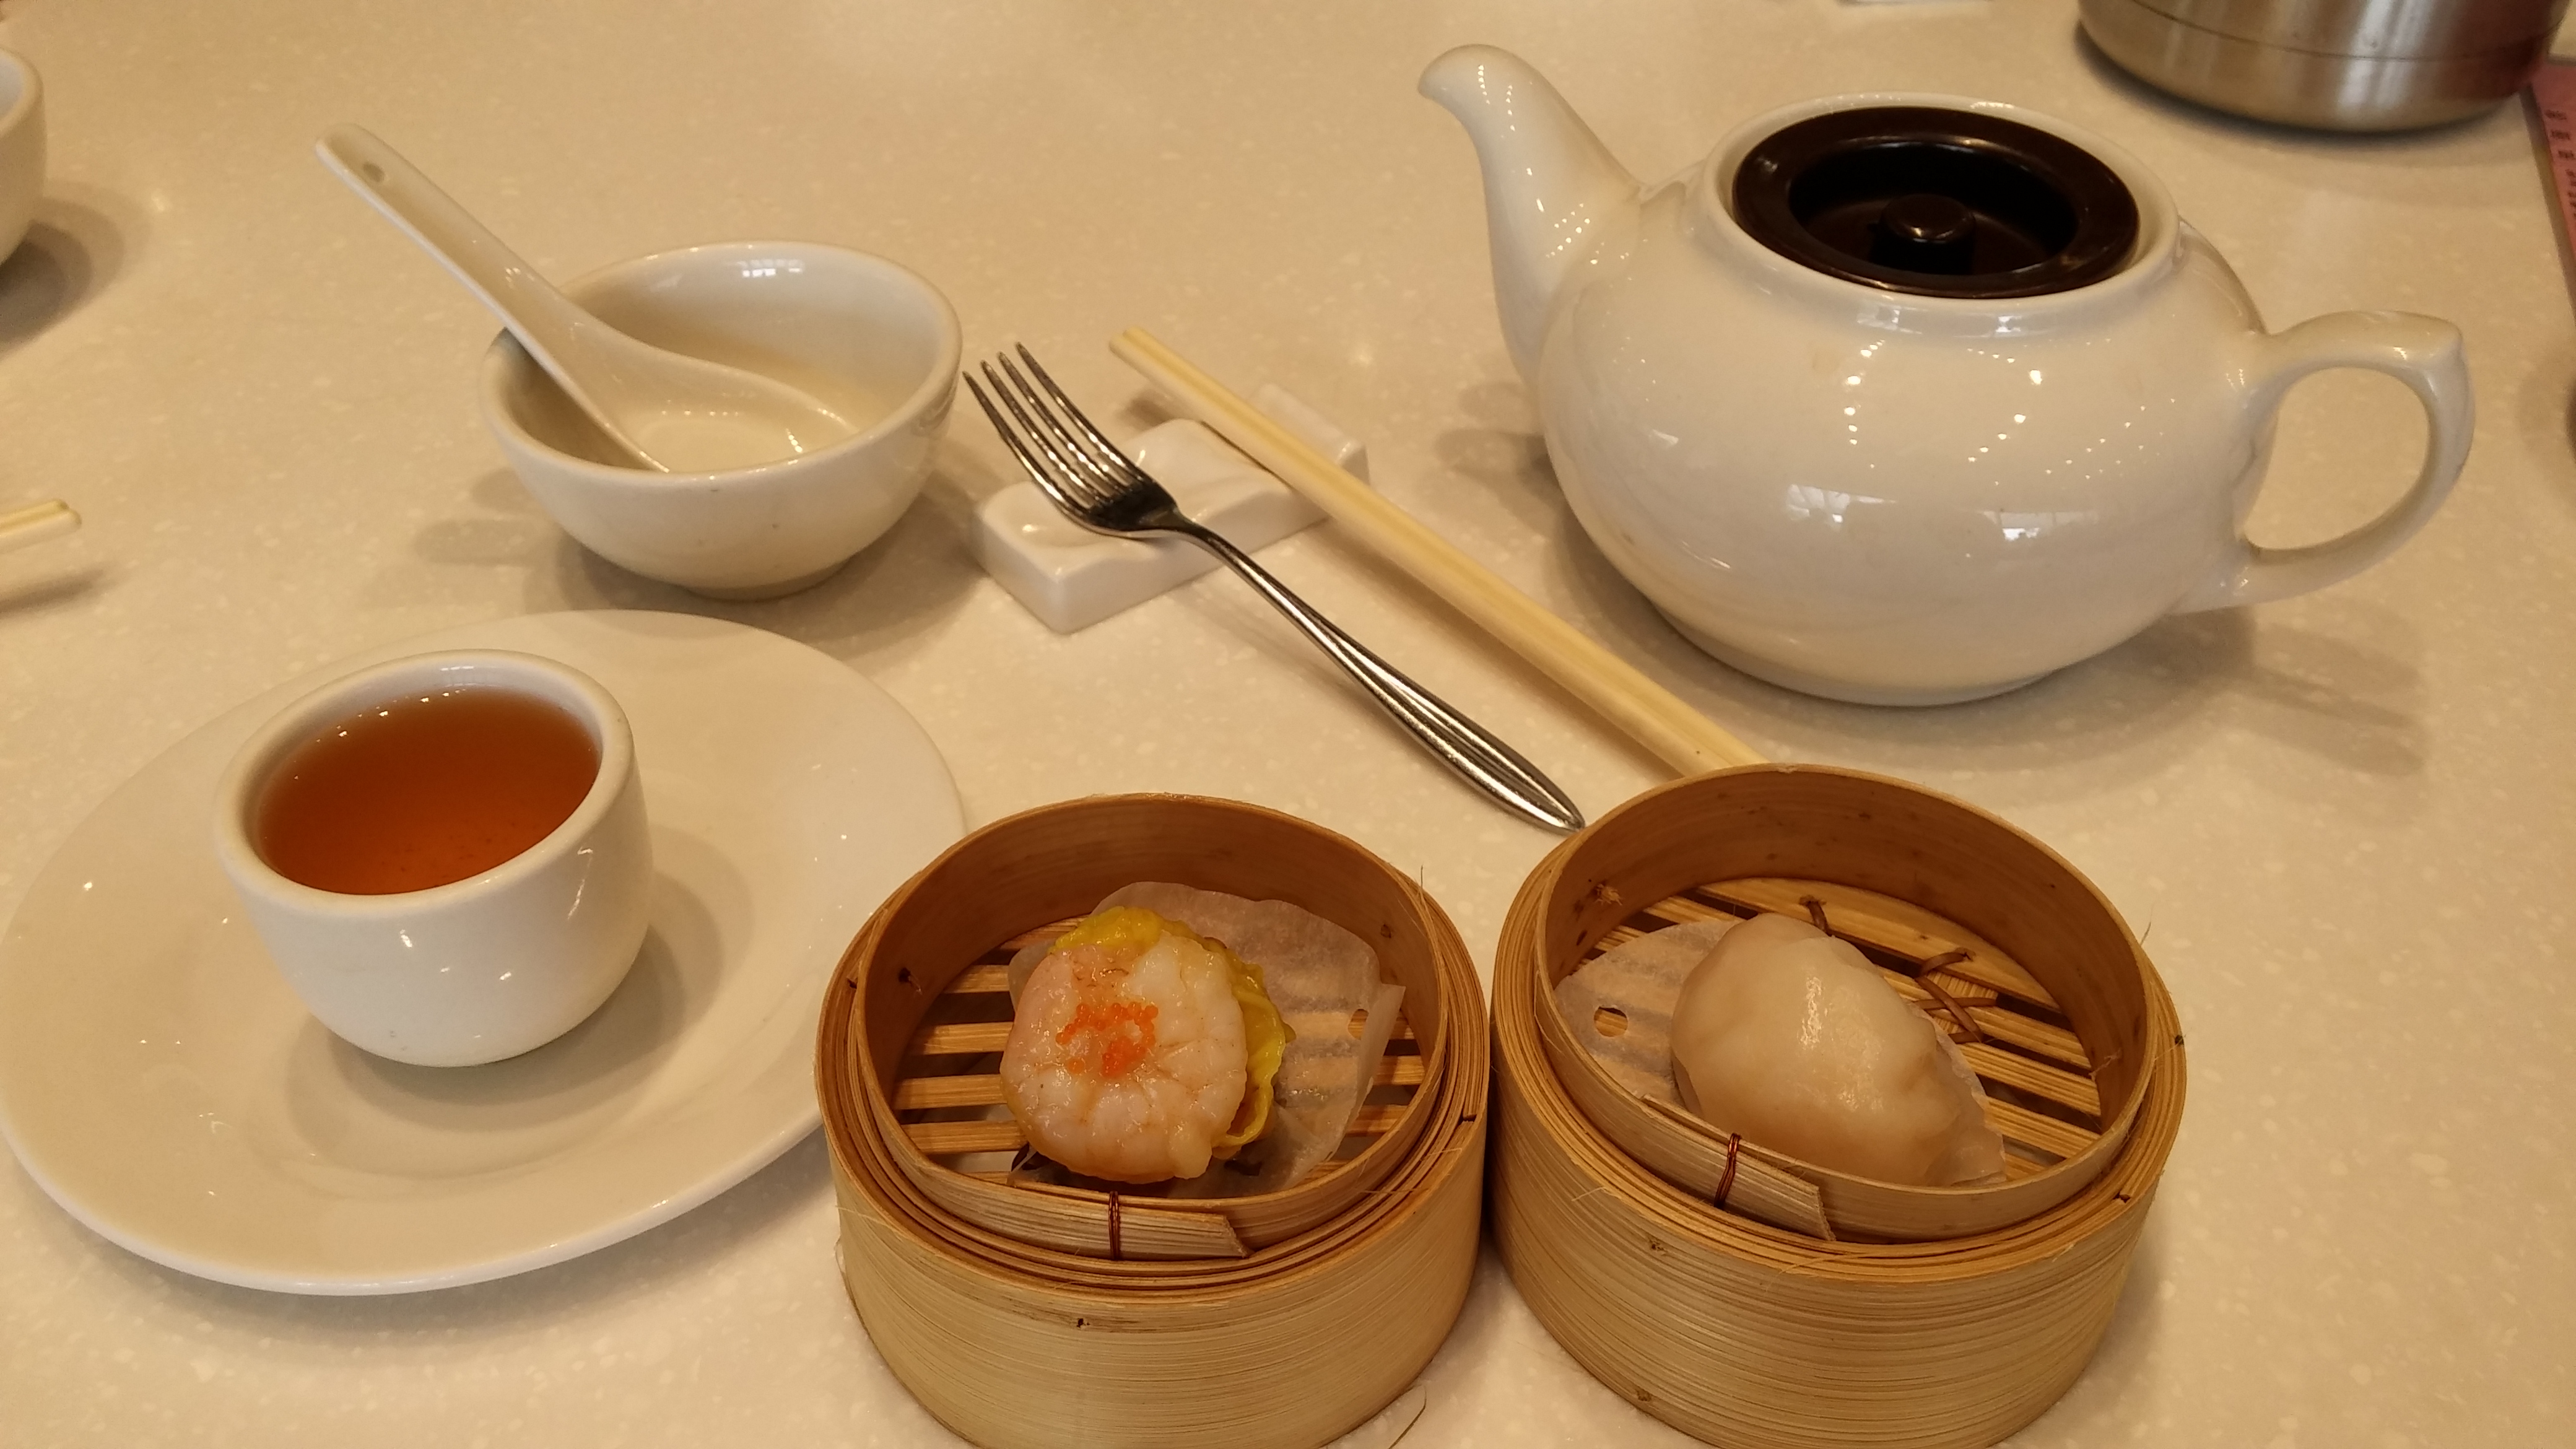 Shrimp dumpling and pork dumpling with tea